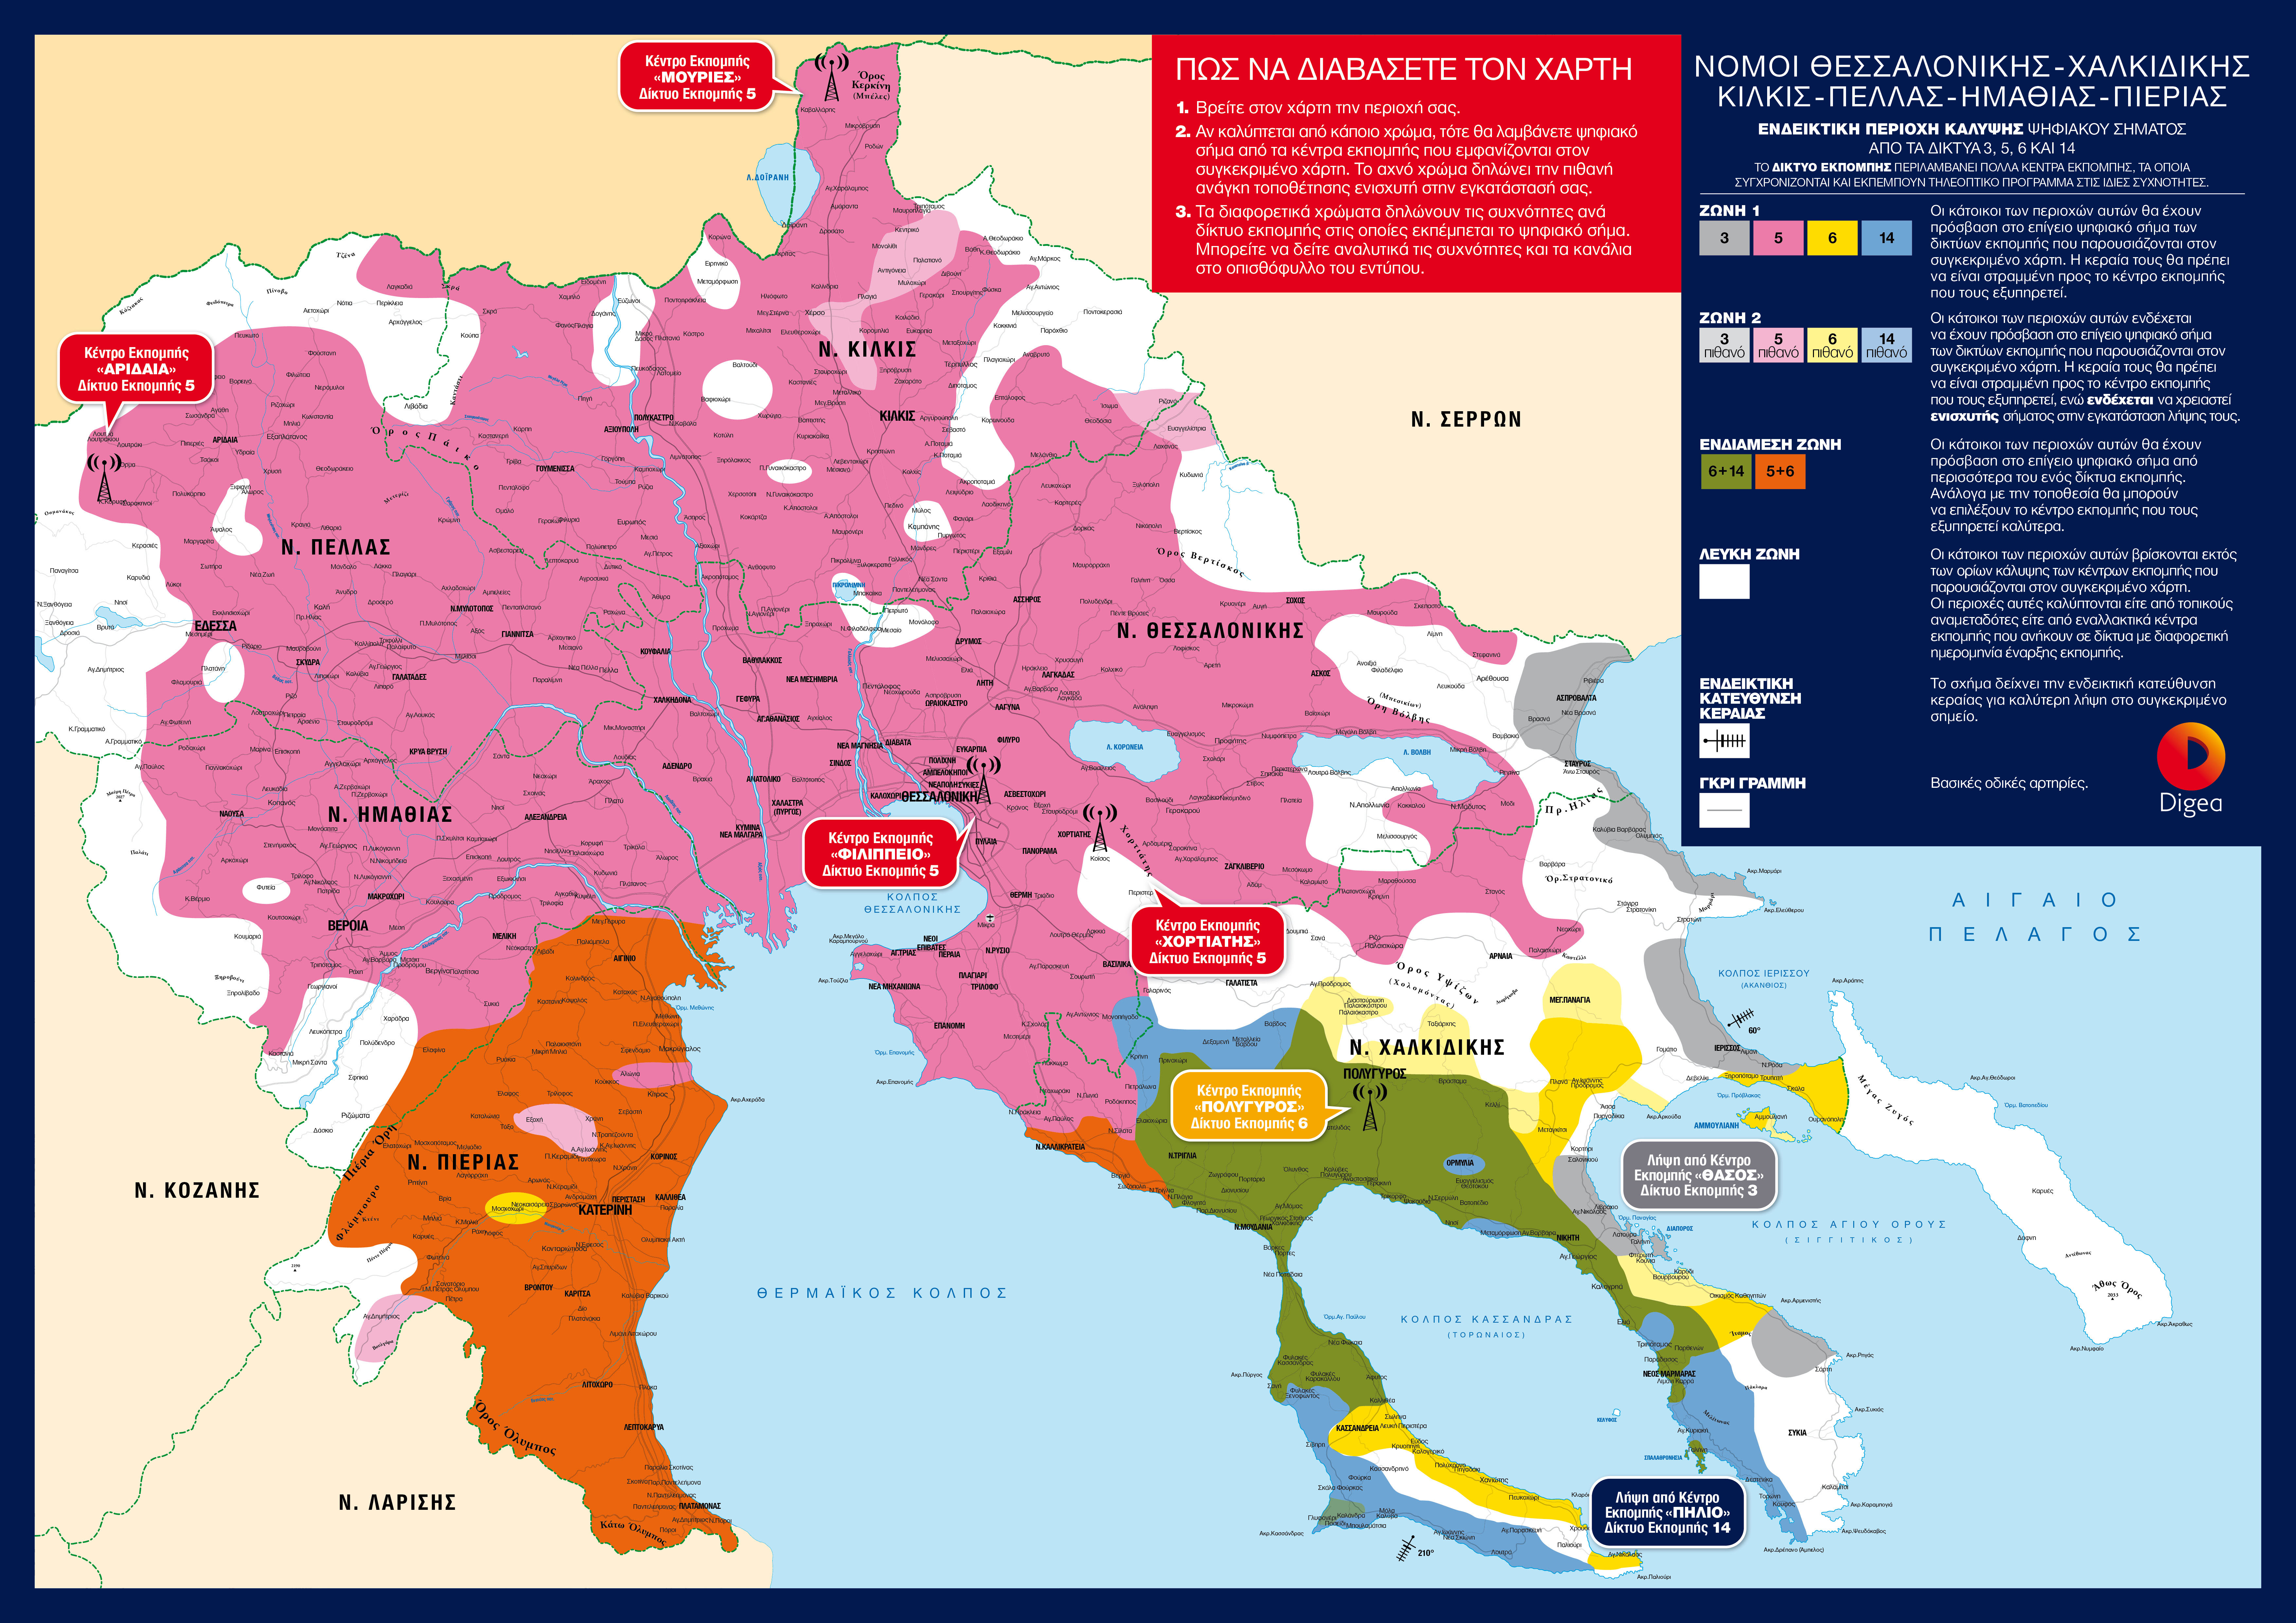 C. Macedonia coverage map